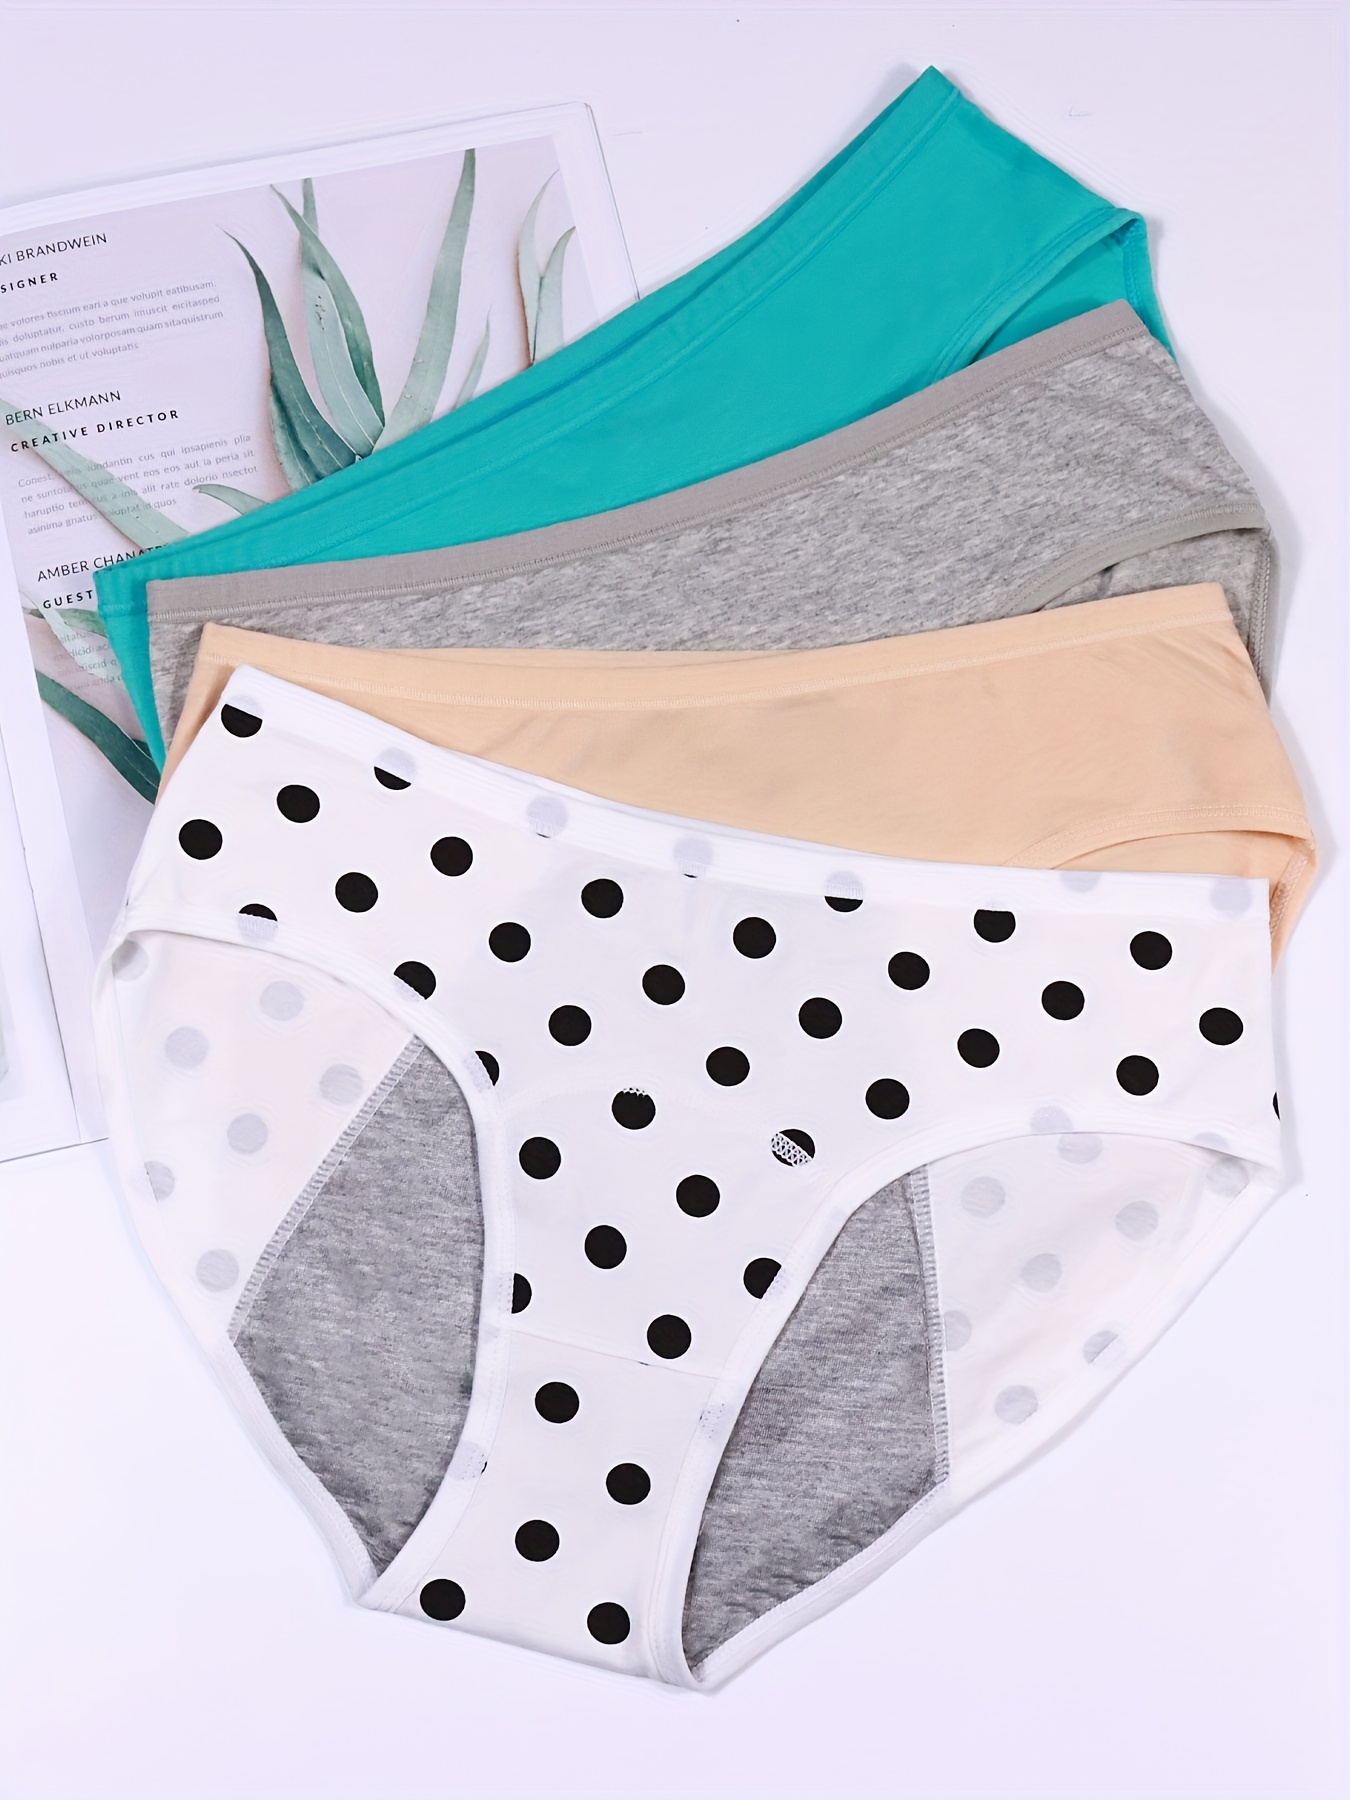 Teen Girls Leak Proof Underwear Cotton Soft Women Panties For Teens Briefs  4 Pack 